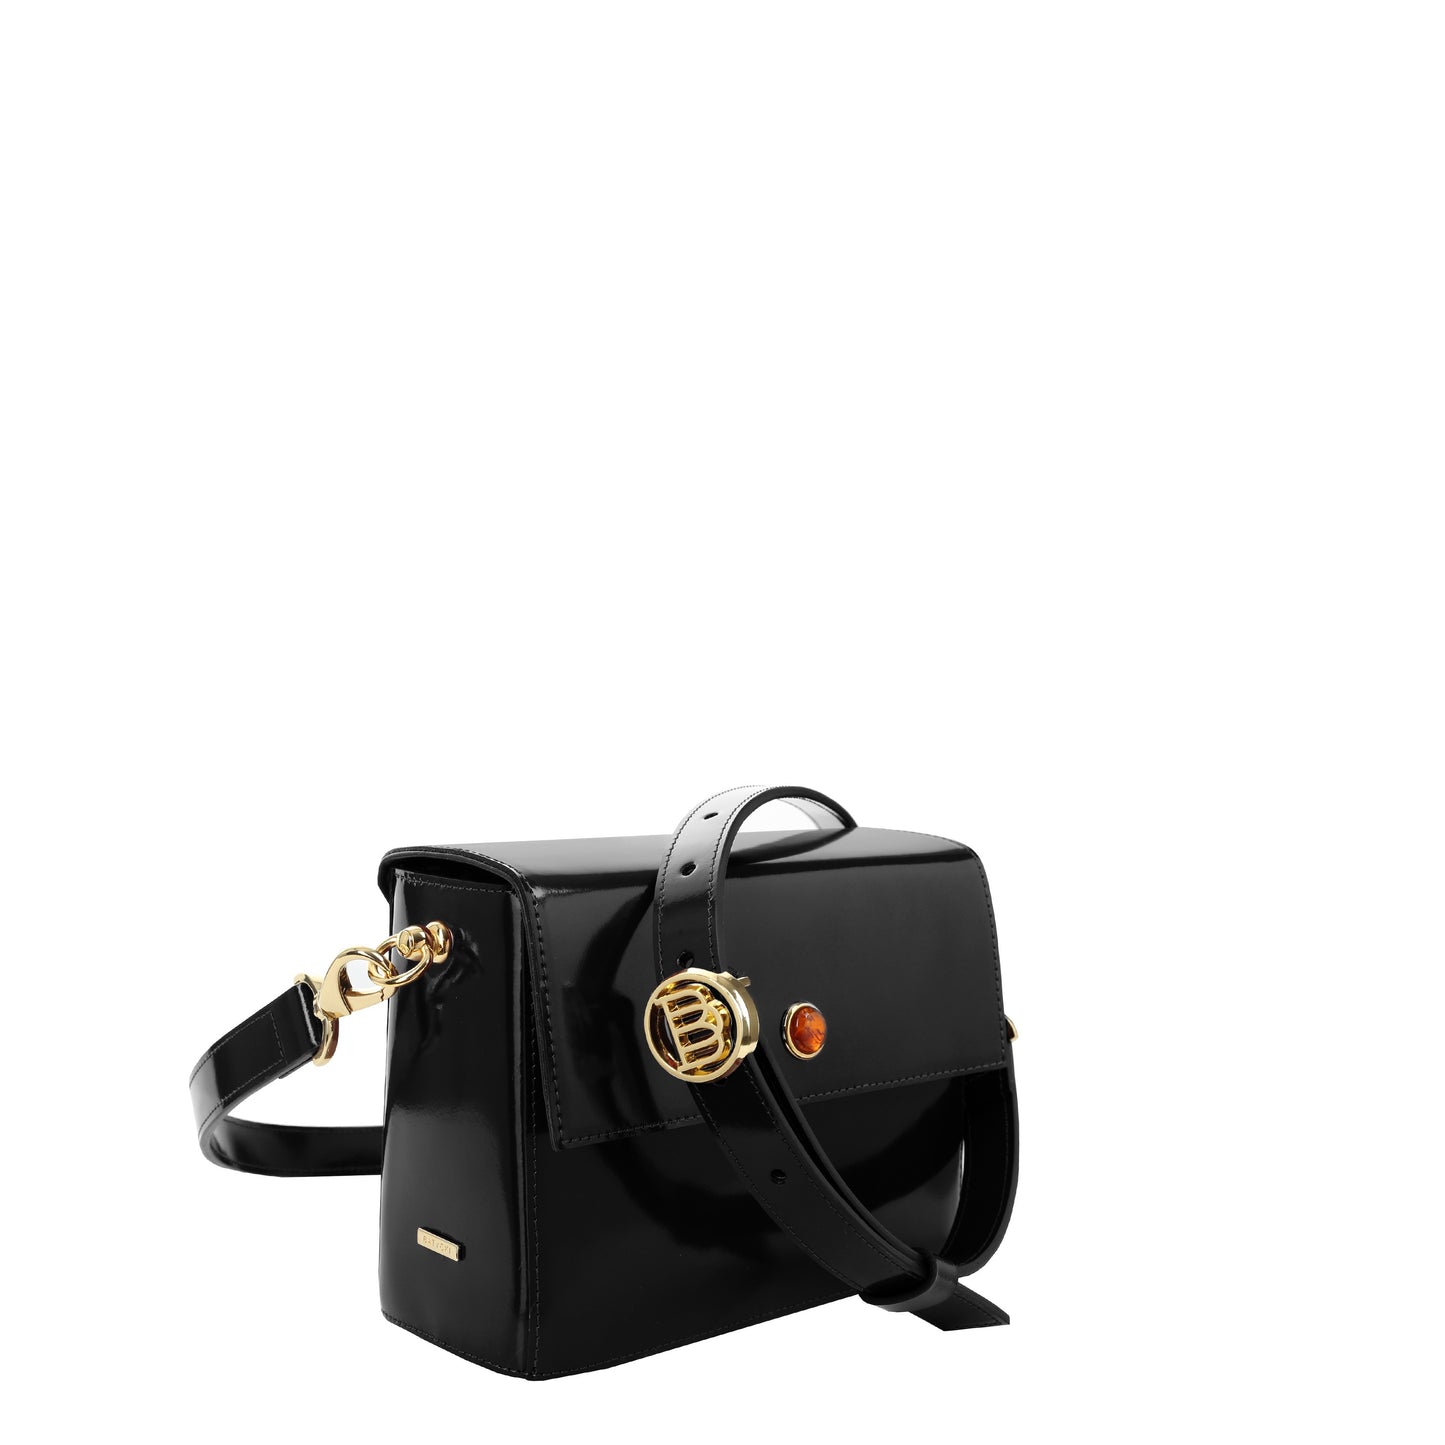 LOWE SPECCHIO BLACK women's leather handbag